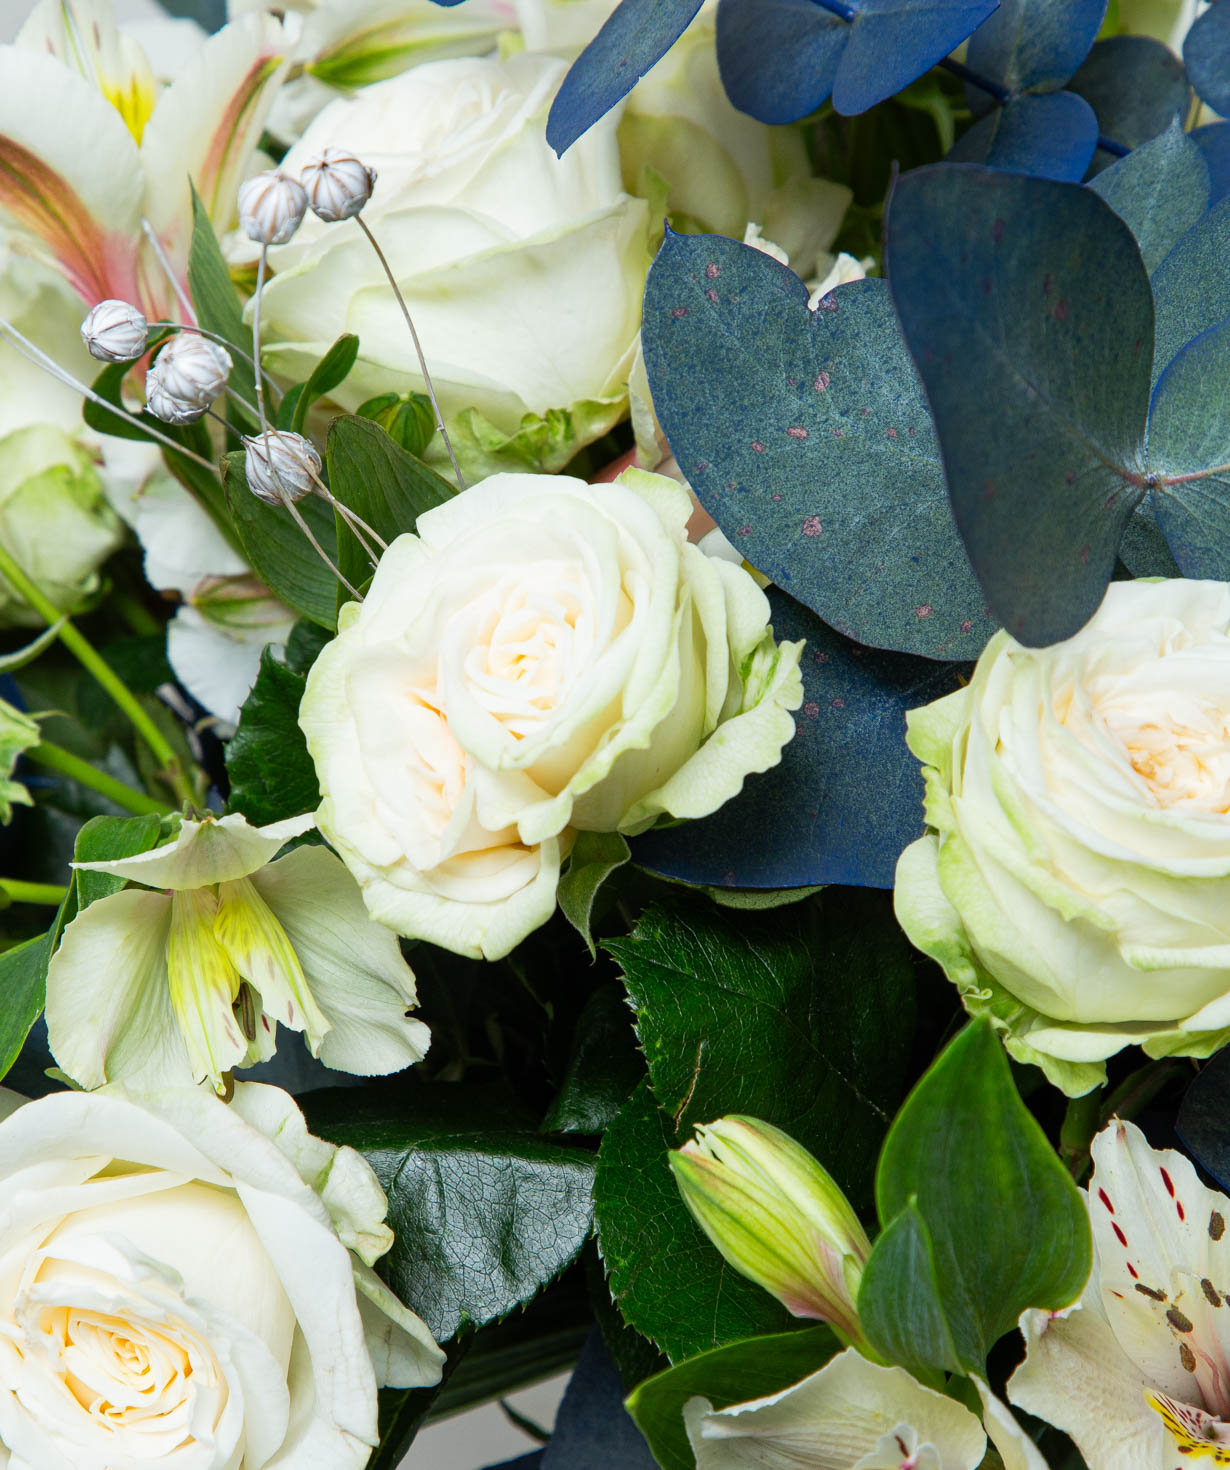 Bouquet «Tenedos» with spray roses and alstroemerias